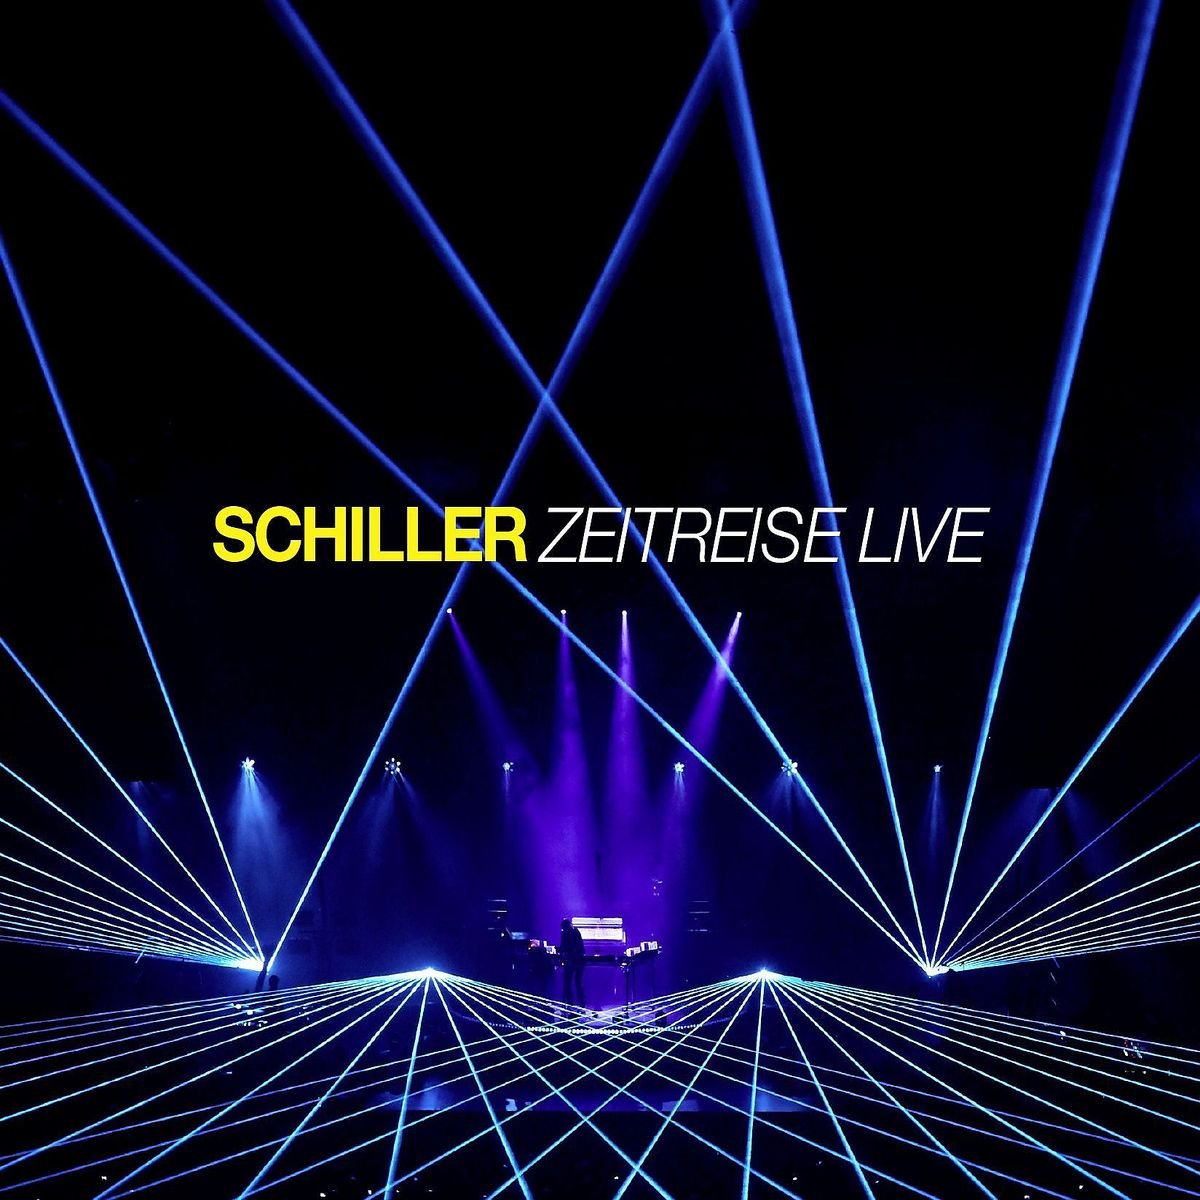 Buy the Zeitreise Live CD here: